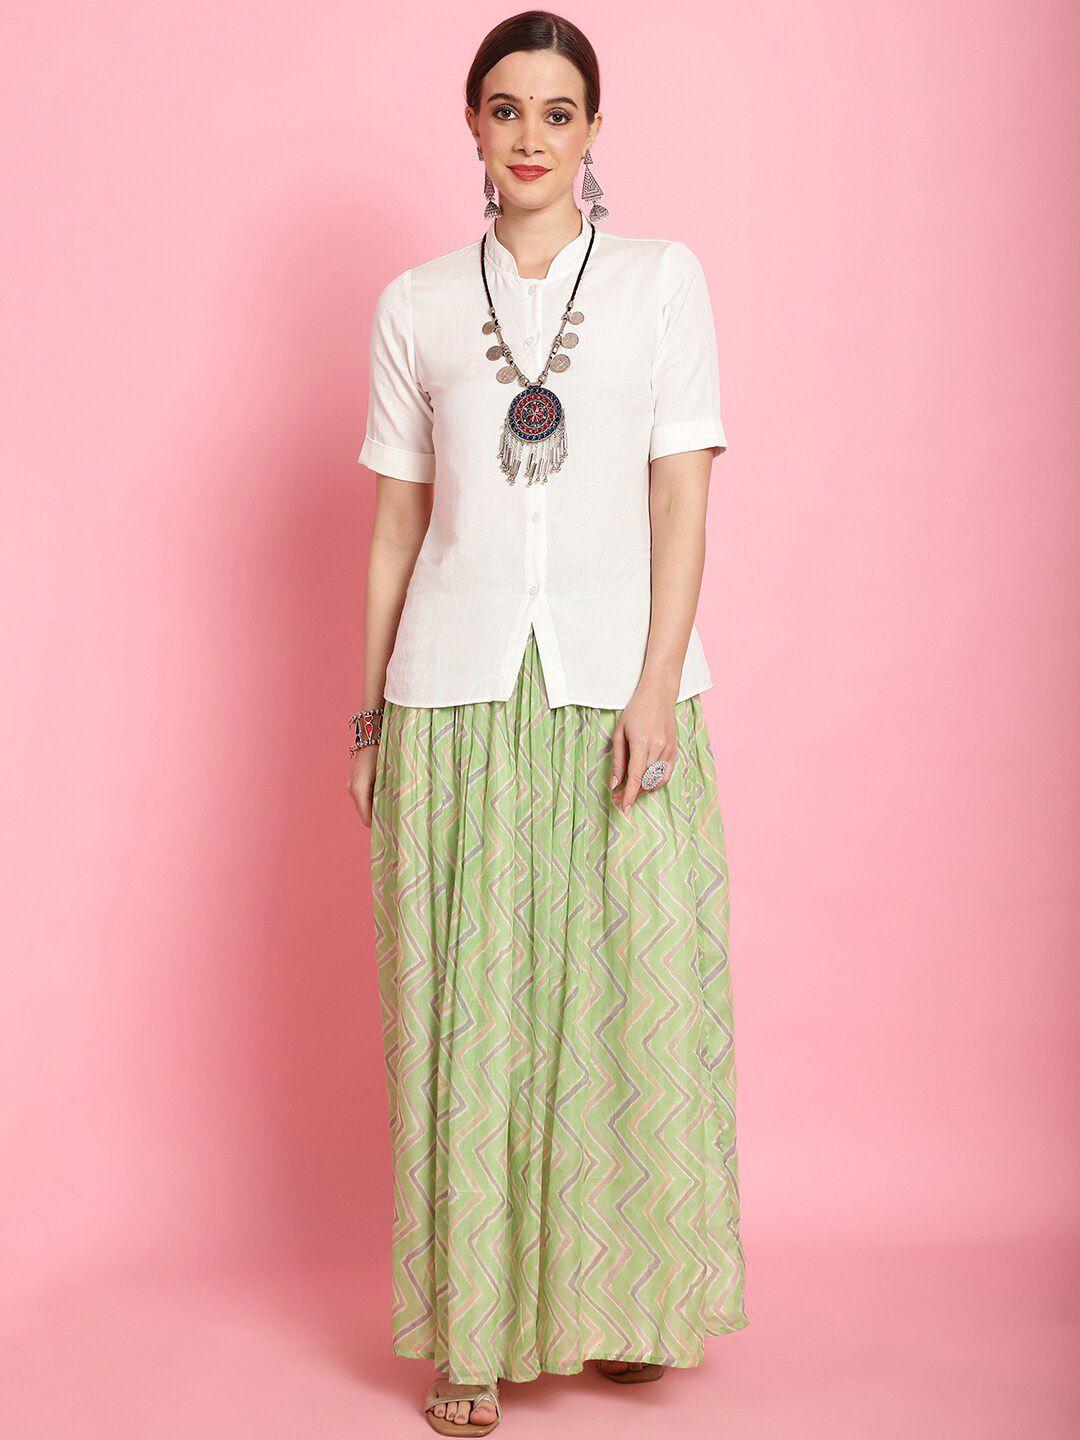 prakrti off-white & green short sleeves pure cotton shirt & printed maxi skirt